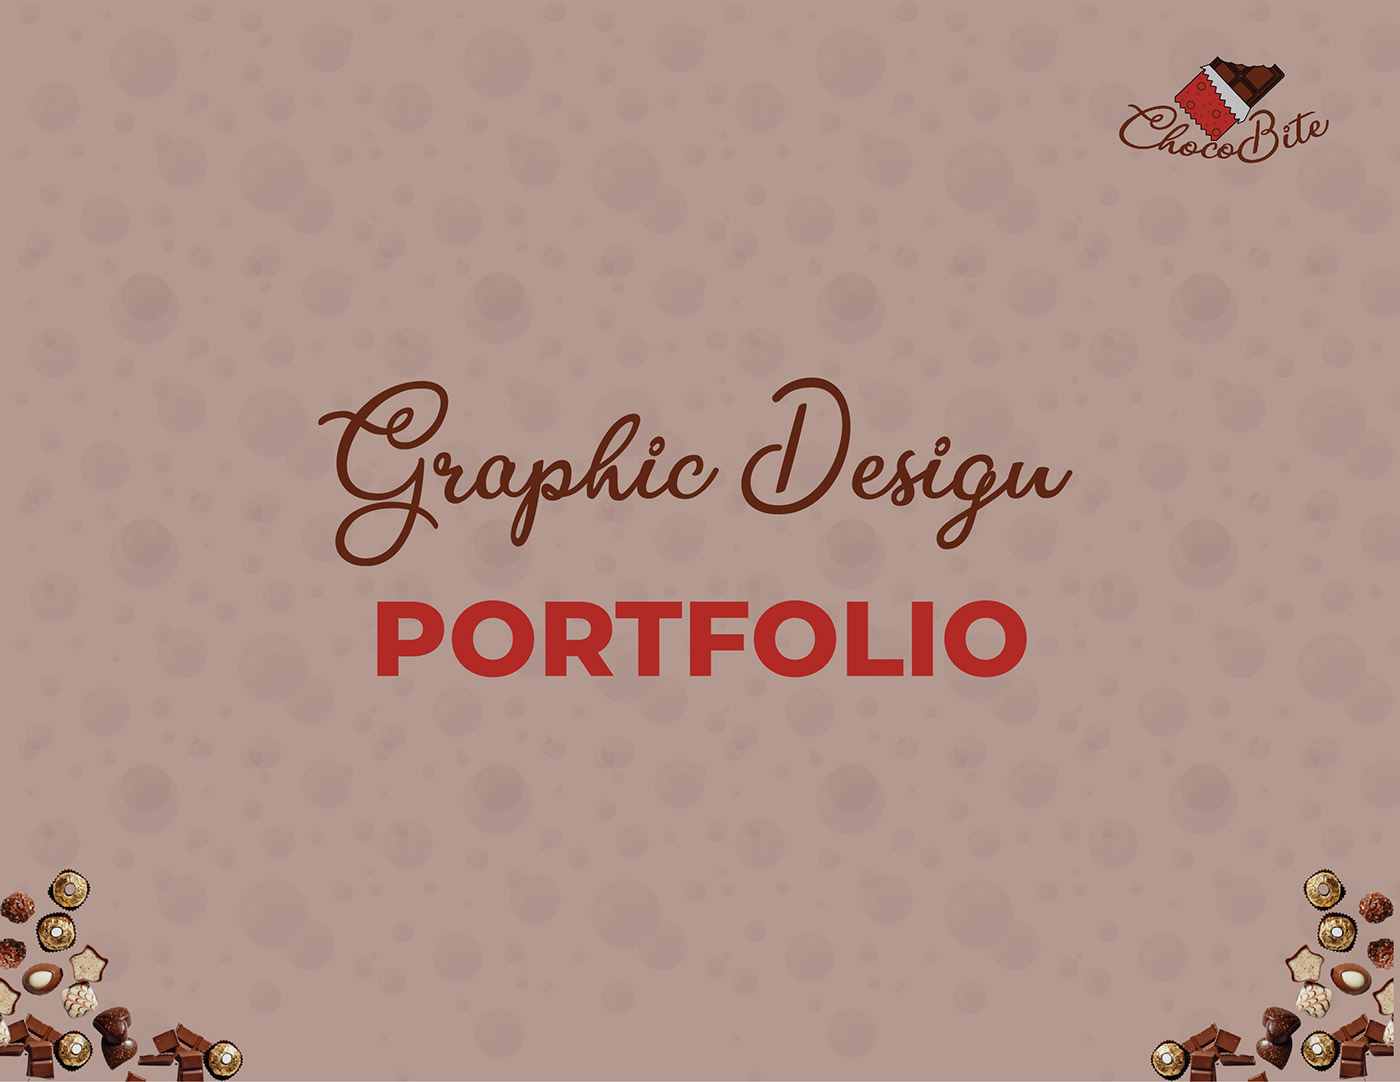 Logo Design brand identity Flyer Design brochure flyer Graphic Designer Brand Design identity menu design restaurant